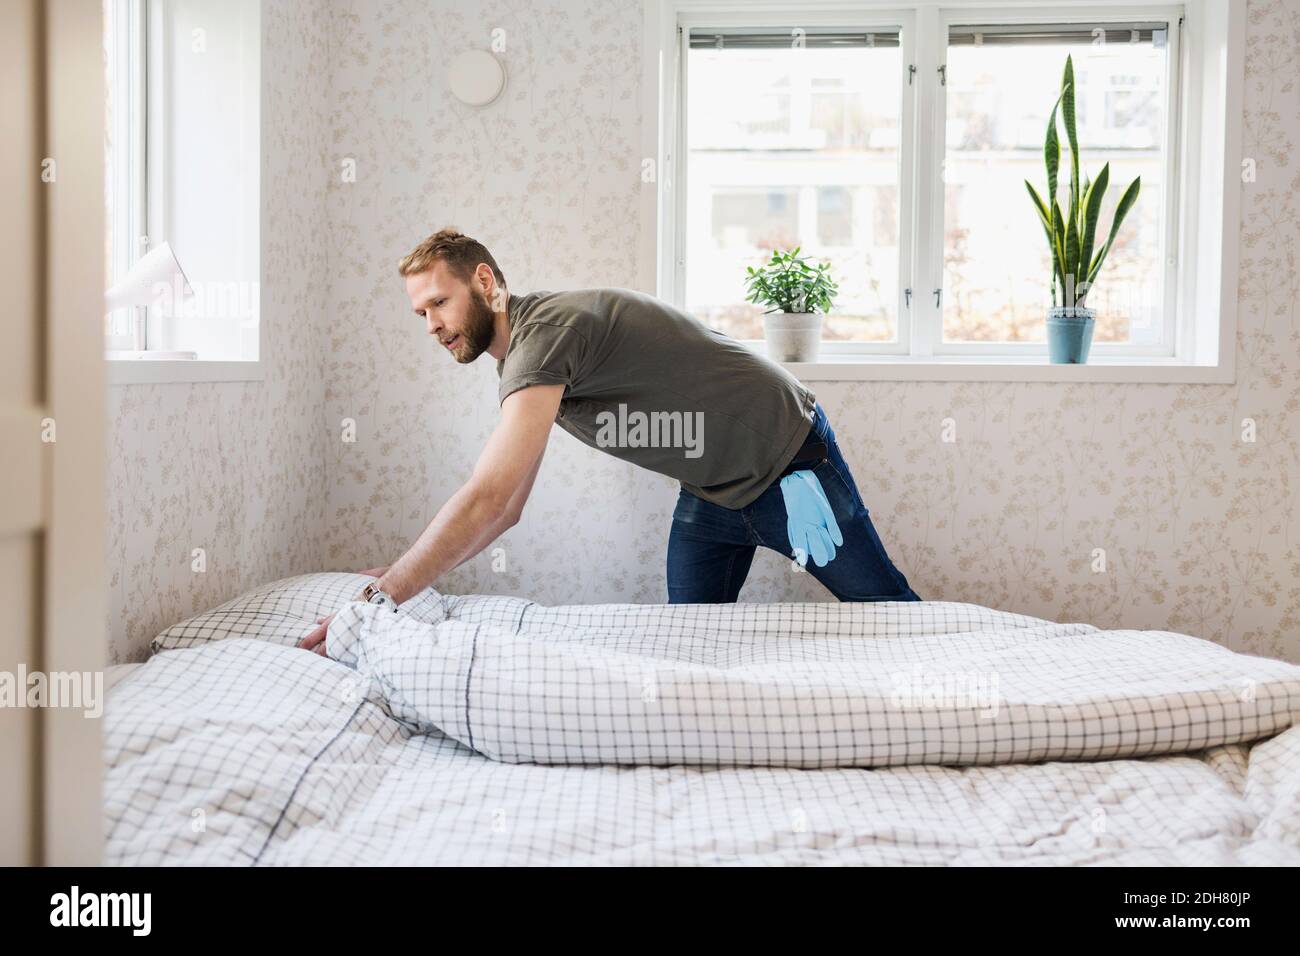 Man making bed Stock Photo